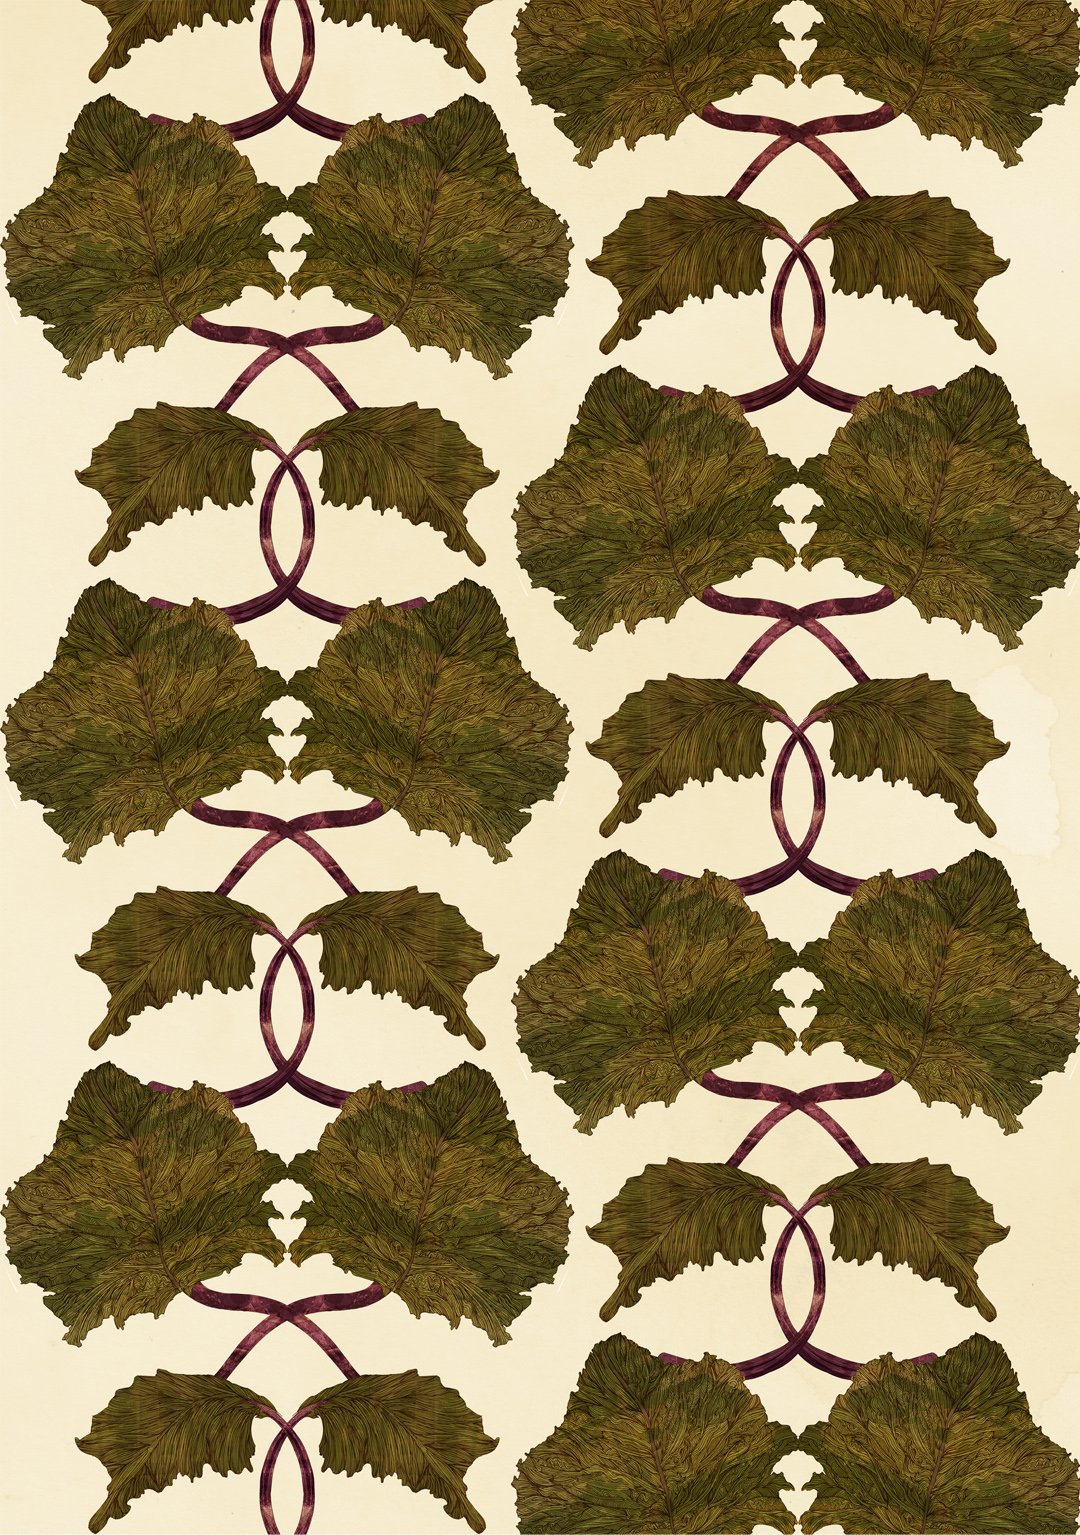 ruth emma fox illustration rhubarb inspired pattern .jpg